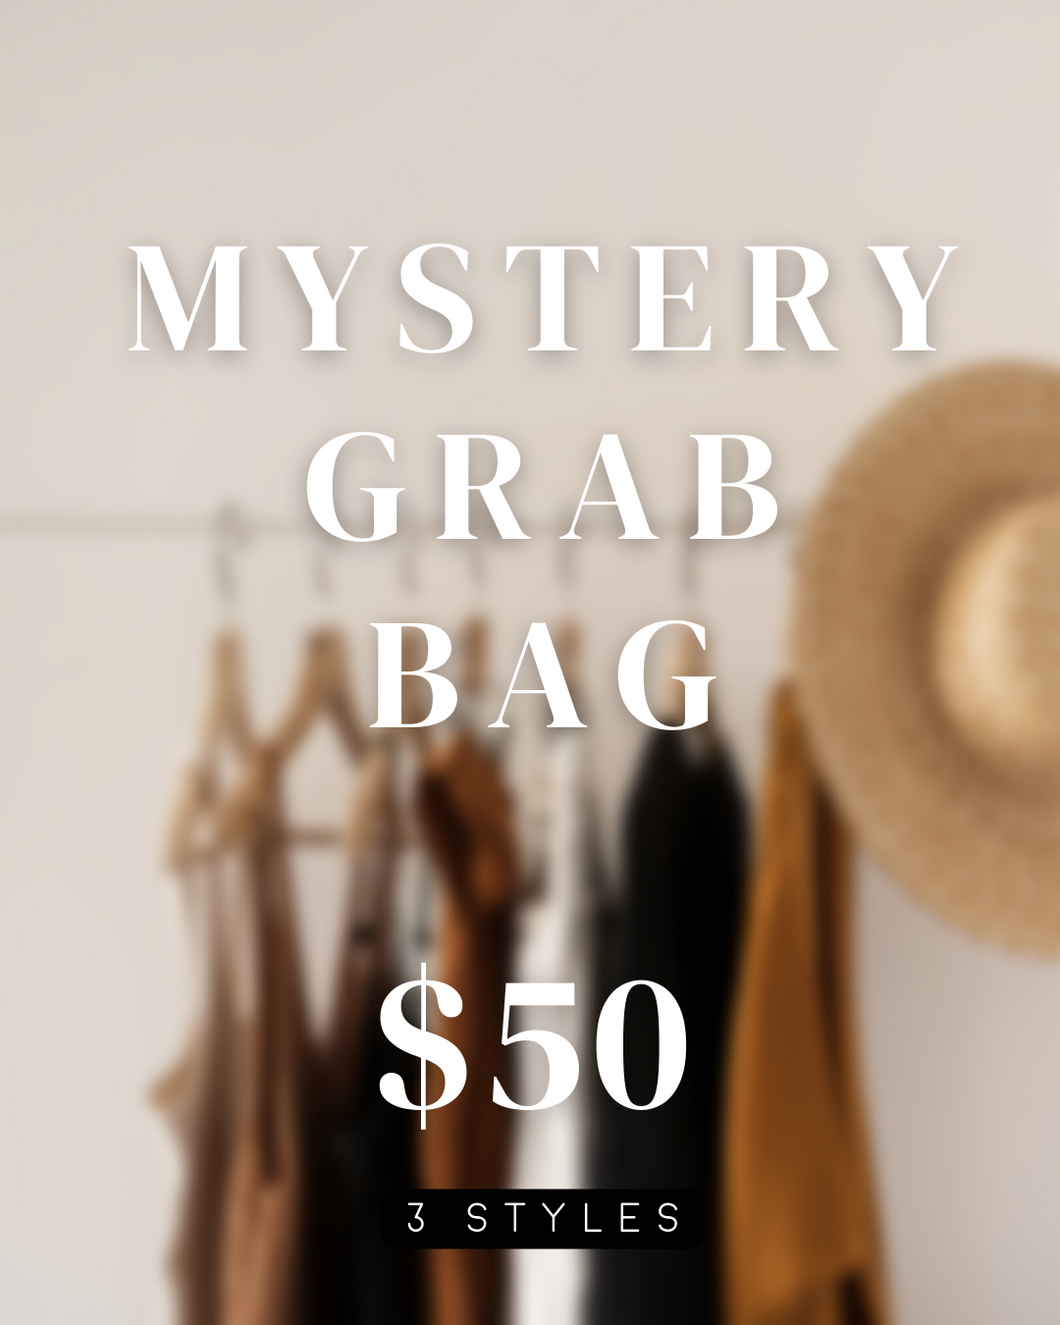 $50 Mystery Grab Bag!